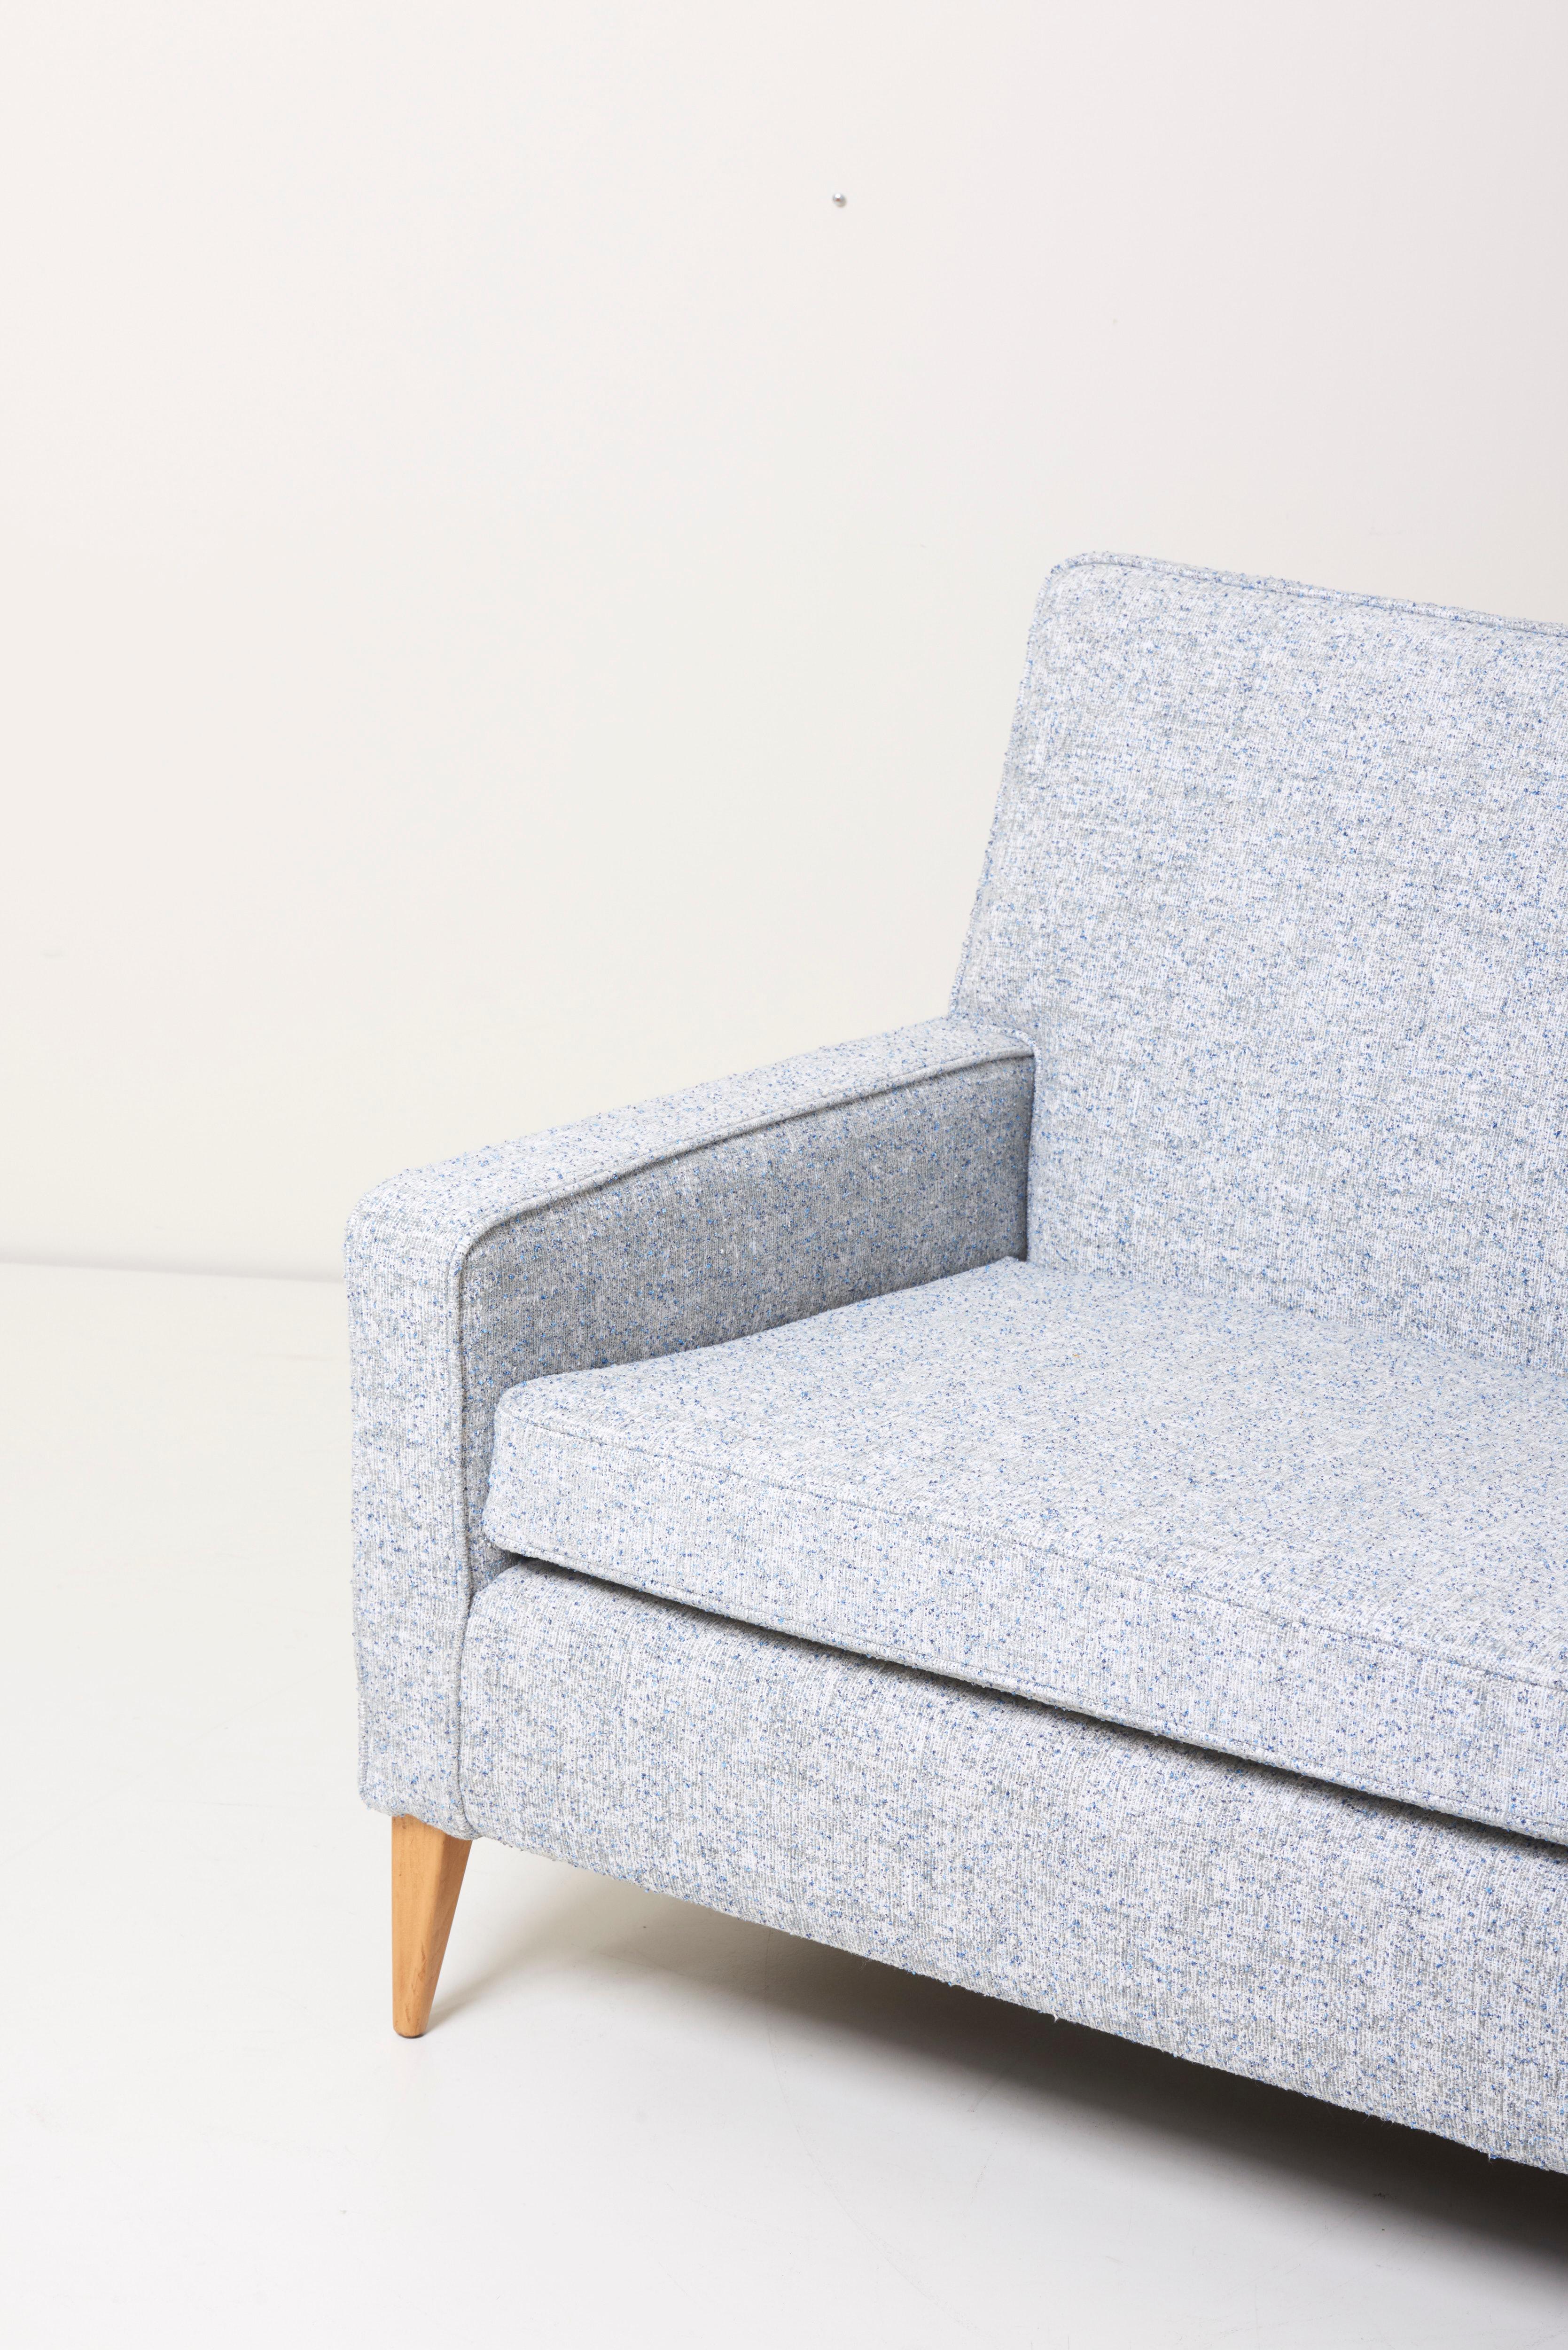 Paul McCobb Sectional Corner Sofa Custom Craft/ Planner Group Newly Upholstered For Sale 5